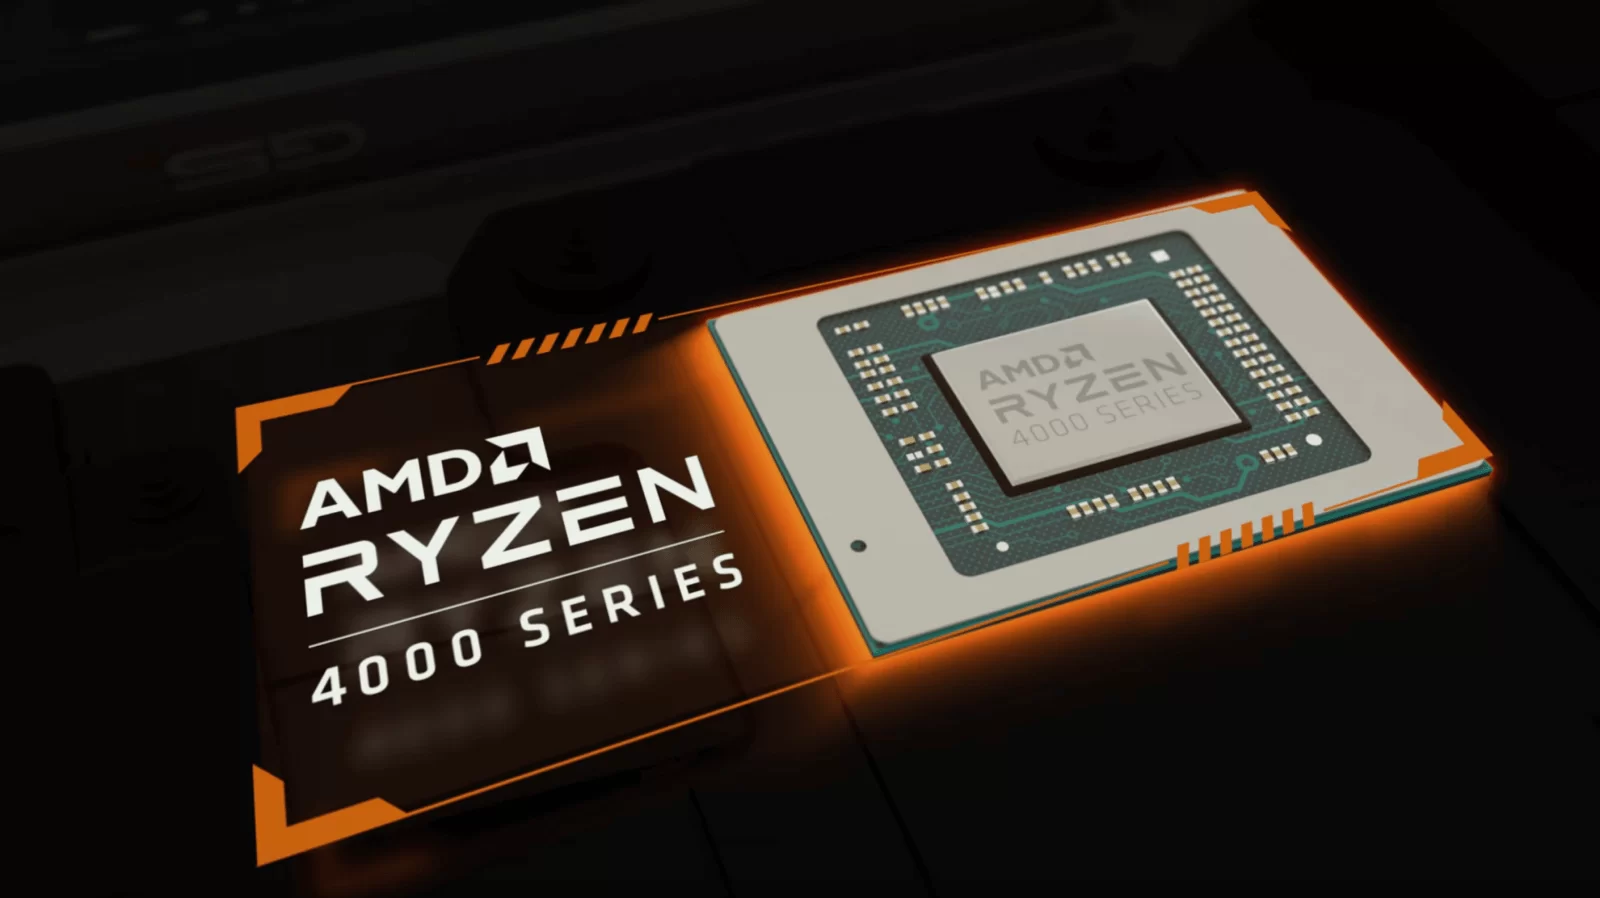 Ryzen 4000 Renoir 2 | AMD | AMD แนะนำโปรเซสเซอร์ AMD Ryzen 4000 Series มาพร้อมกราฟิกการ์ด AMD Radeon เพื่อส่งมอบประสิทธิภาพที่ก้าวล้ำให้กับการใช้งานเชิงพาณิชย์และผู้ใช้คอมพิวเตอร์ทั่วไป